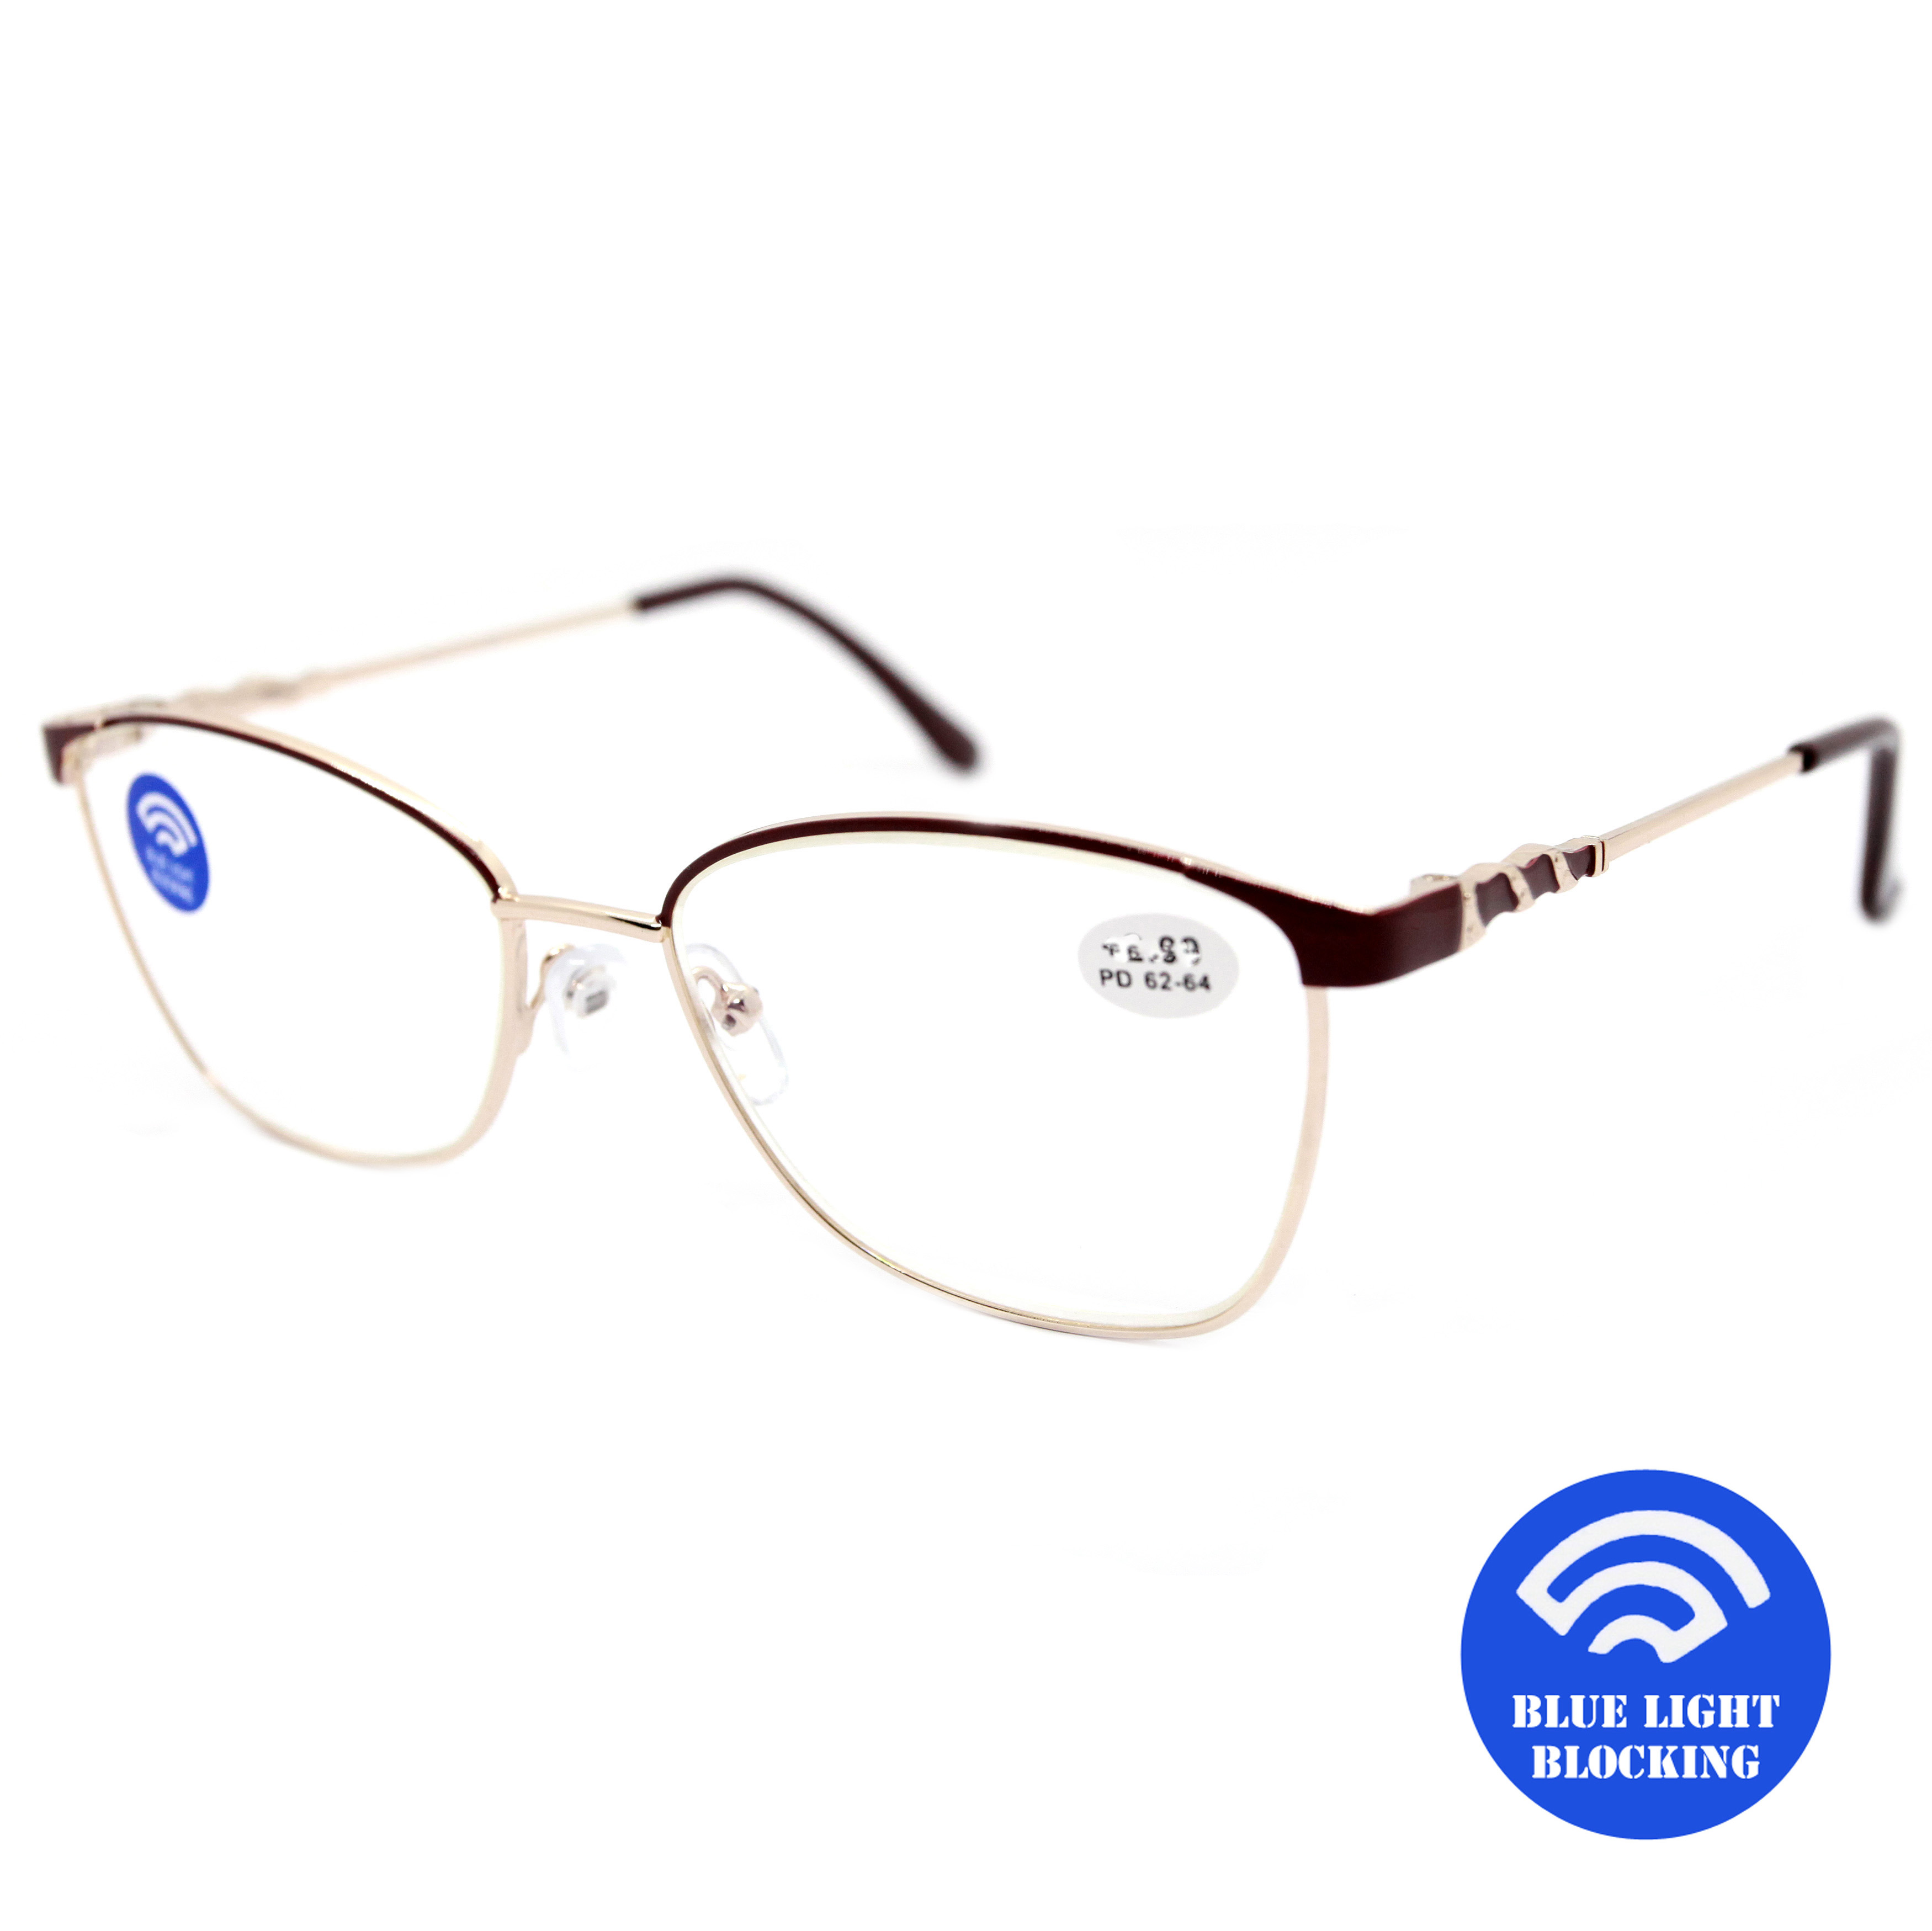 Готовые очки Glodiatr 1731 +2,50, без футляра, BLUE BLOCKER, бордовый, РЦ 62-64